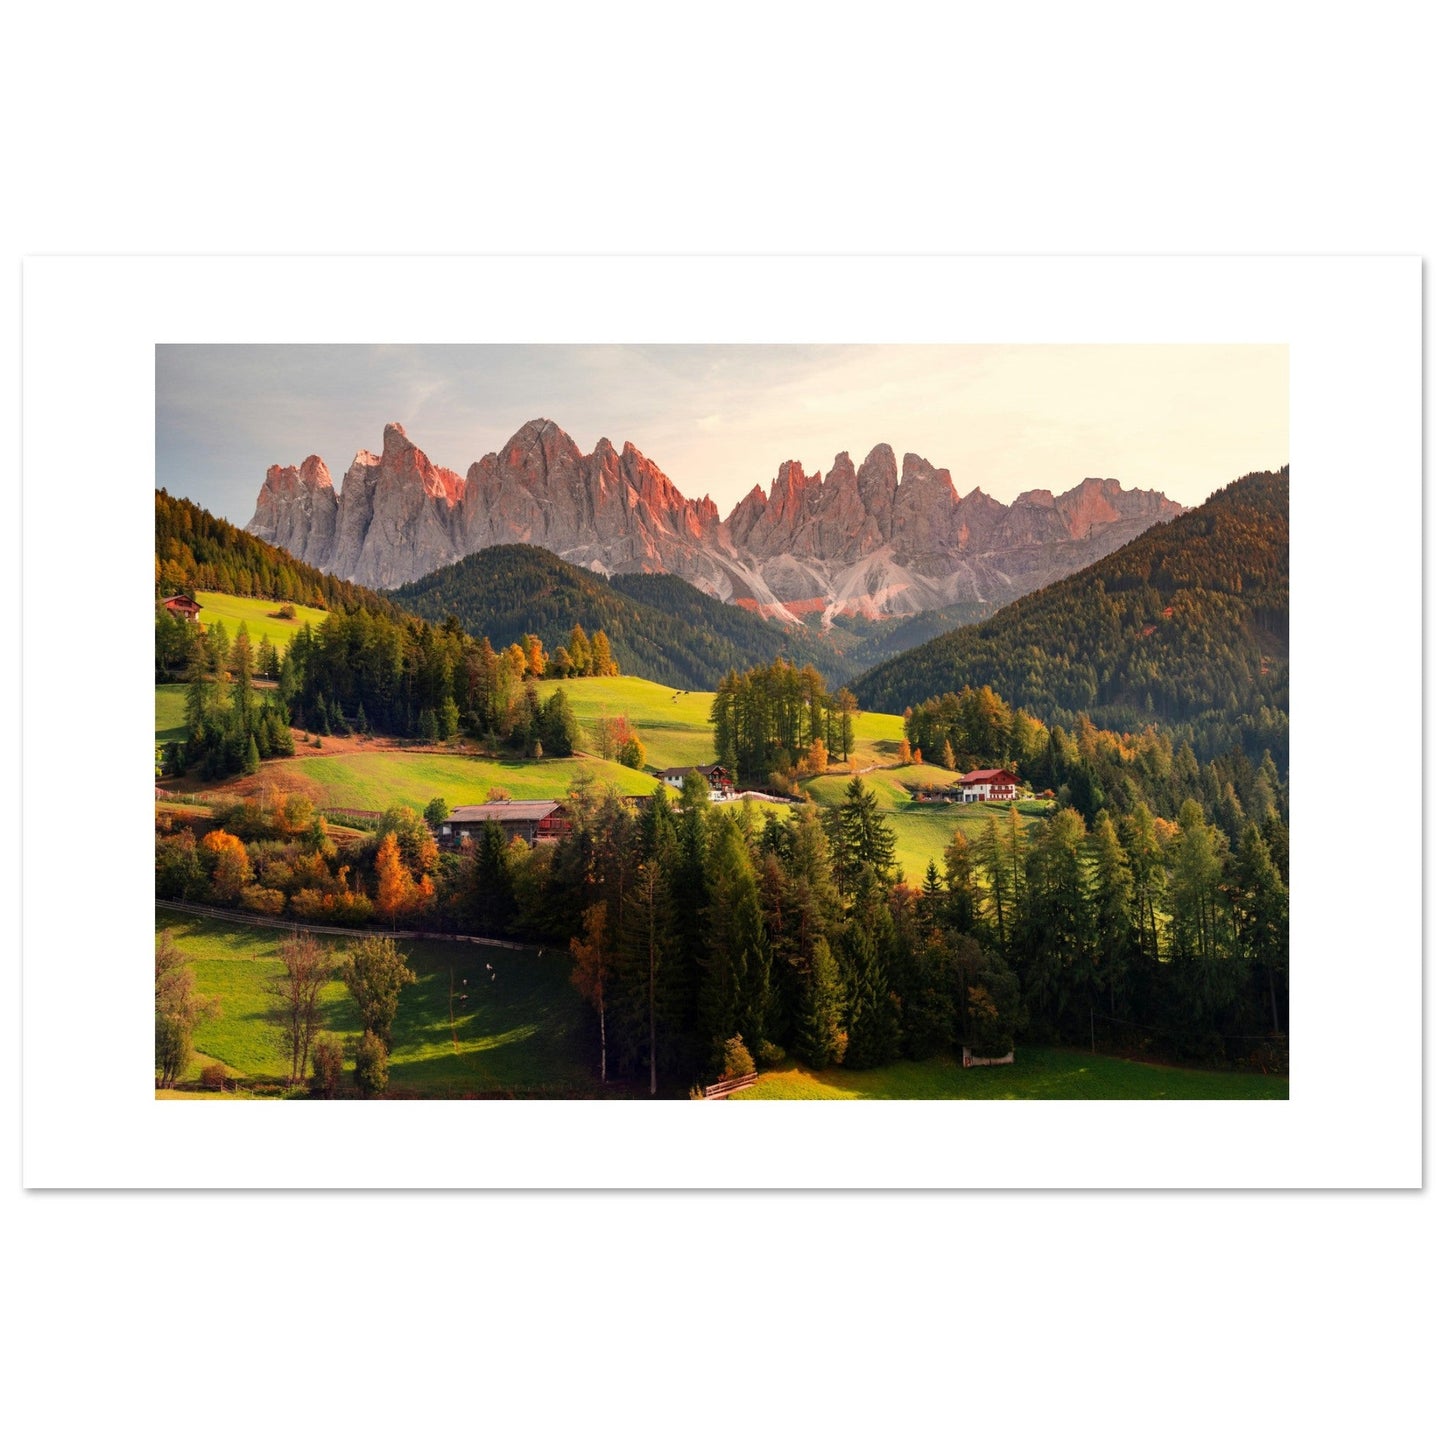 Vente Photo de Funes, Trentin-Haut-Adige, Italie #1 - Tableau photo paysage